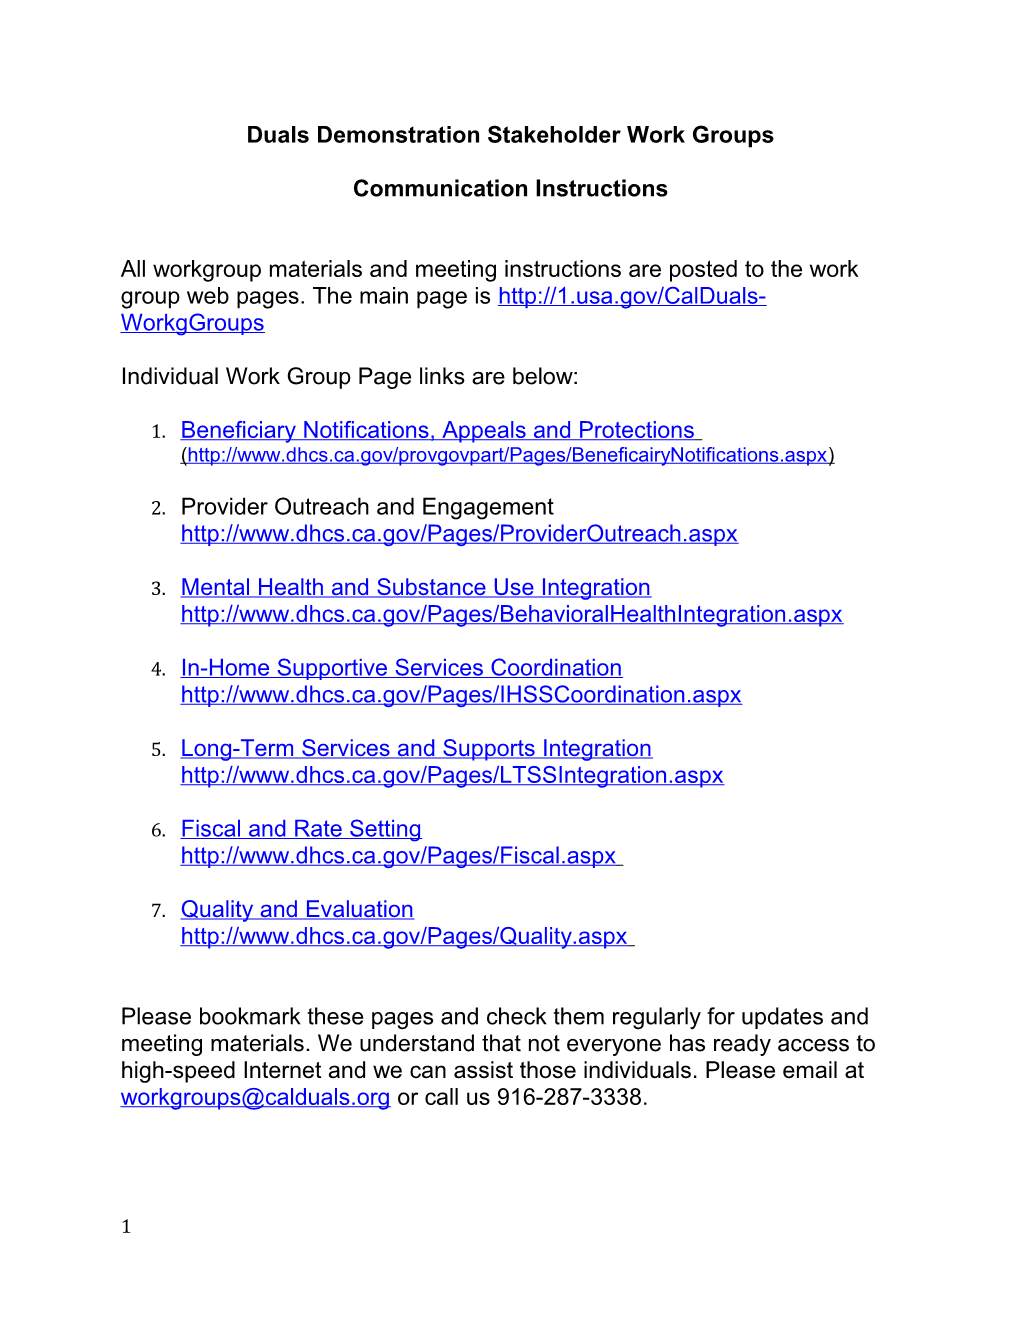 Workgroup Communication Instructions